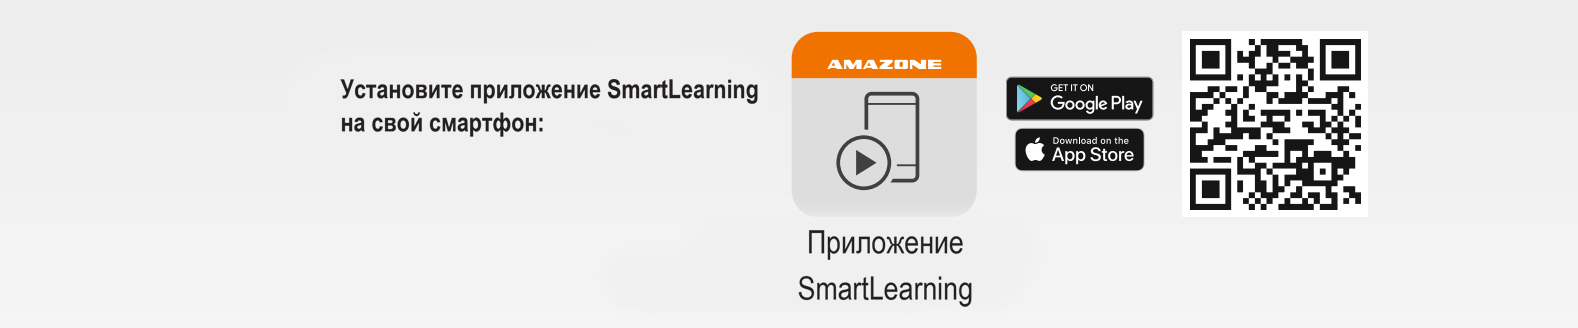 smartLearning-app-qr